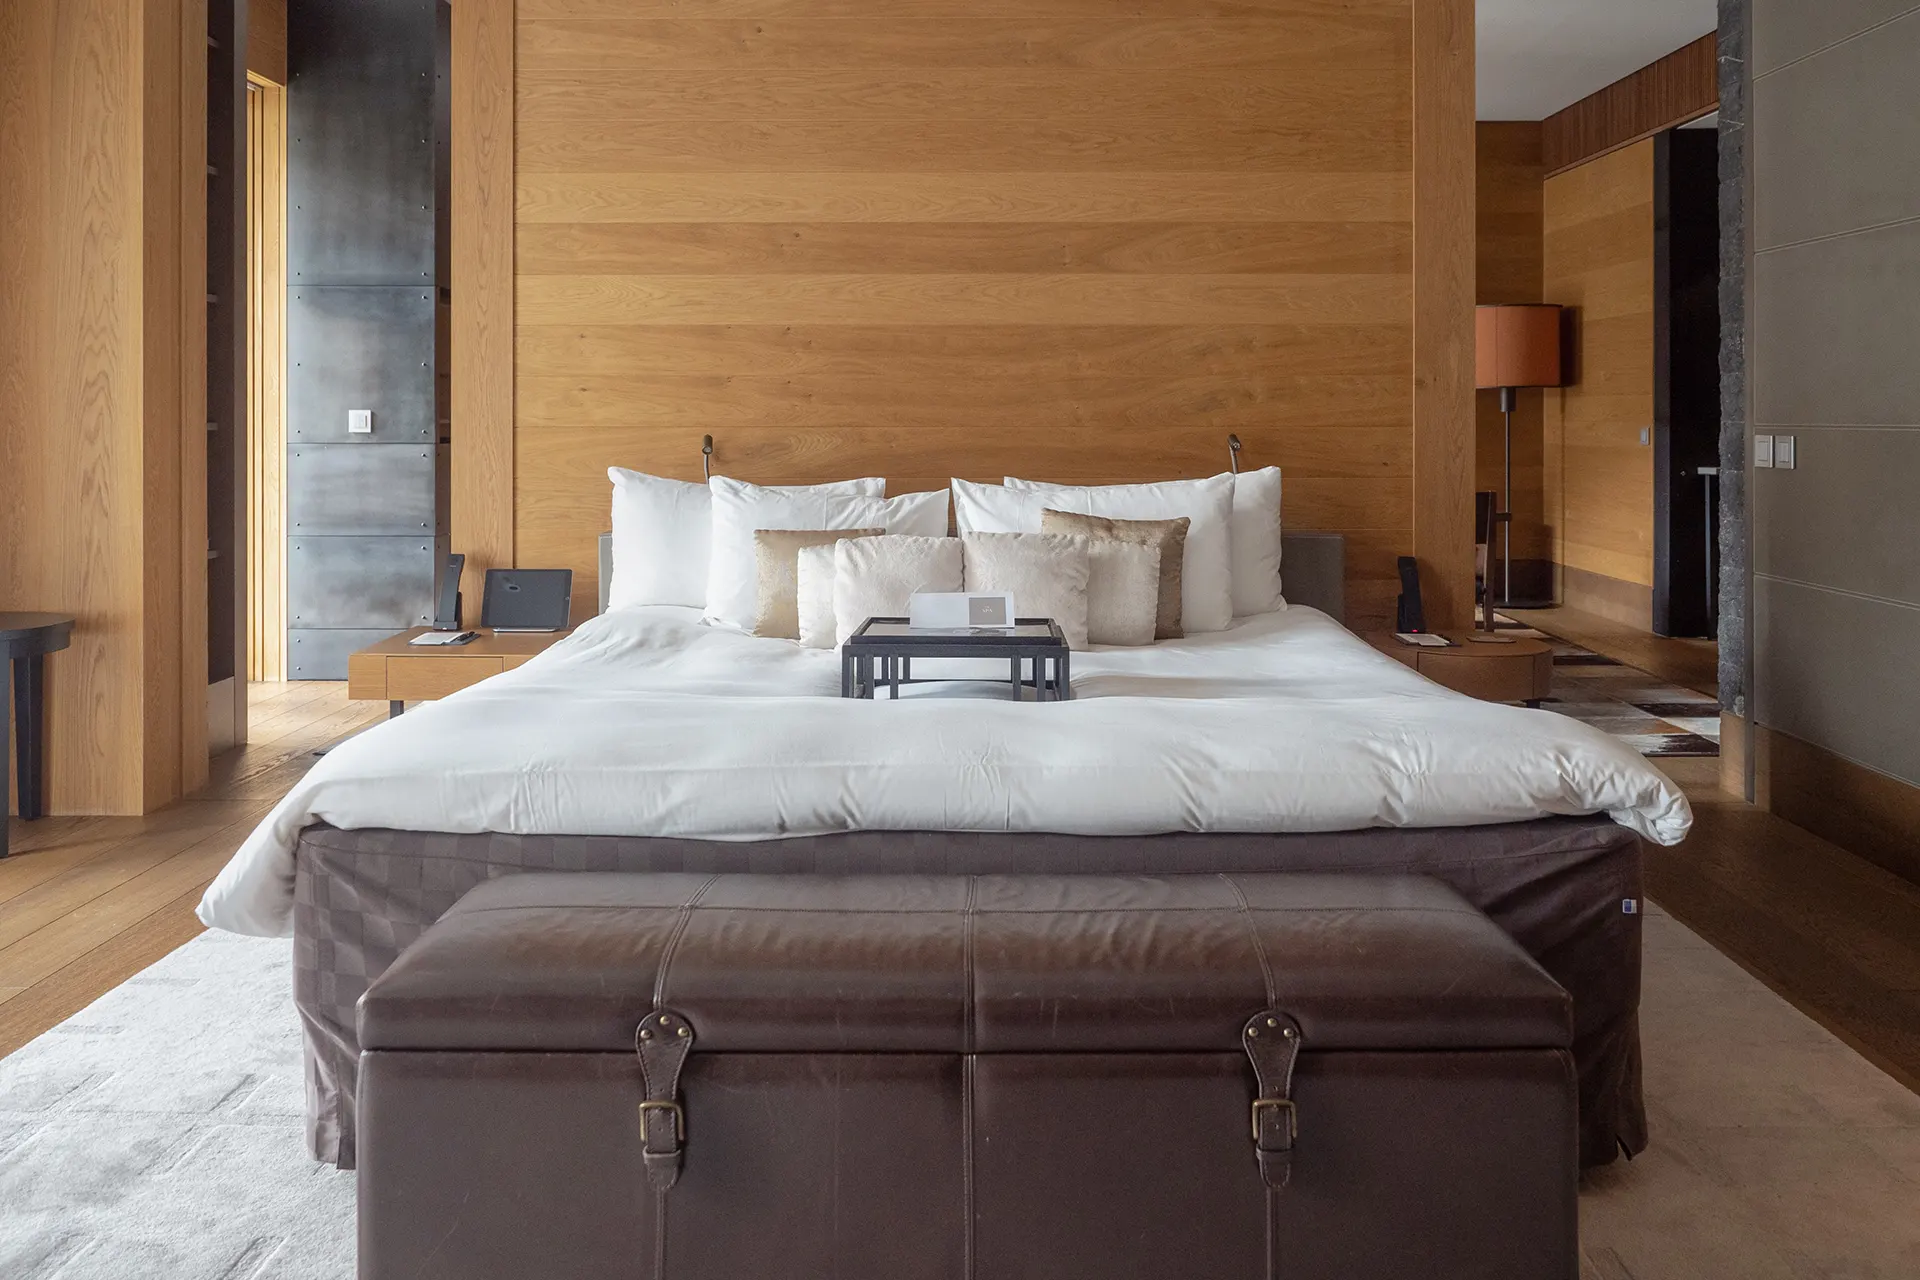 Doppelbett hinter großen Bettkasten aus Leder